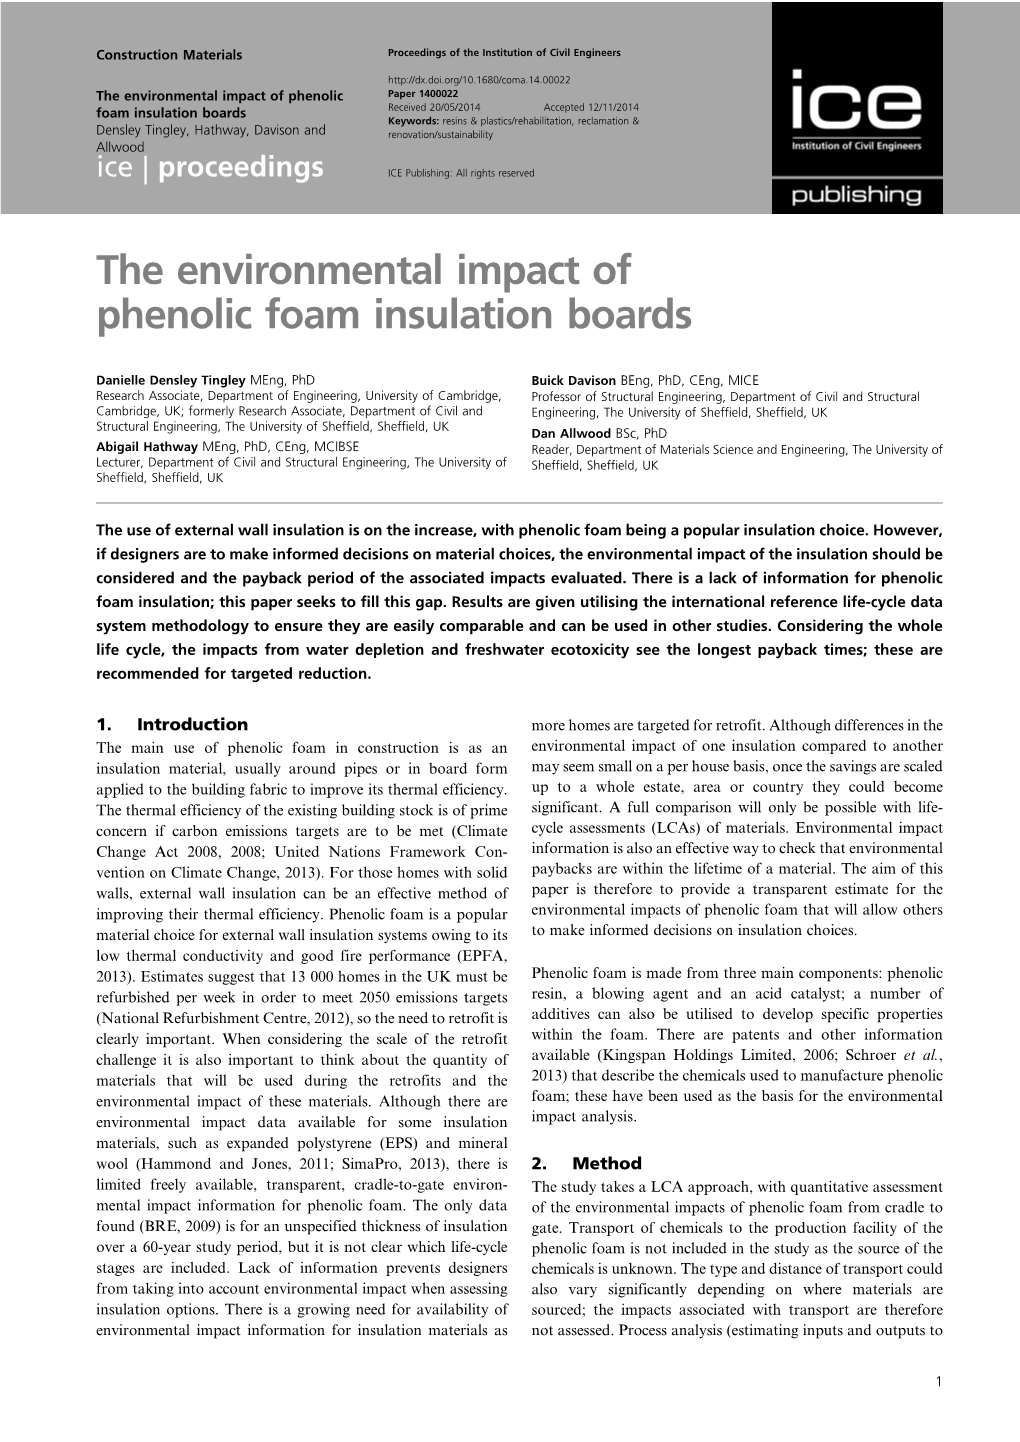 The Environmental Impact of Phenolic Foam Insulation Boards